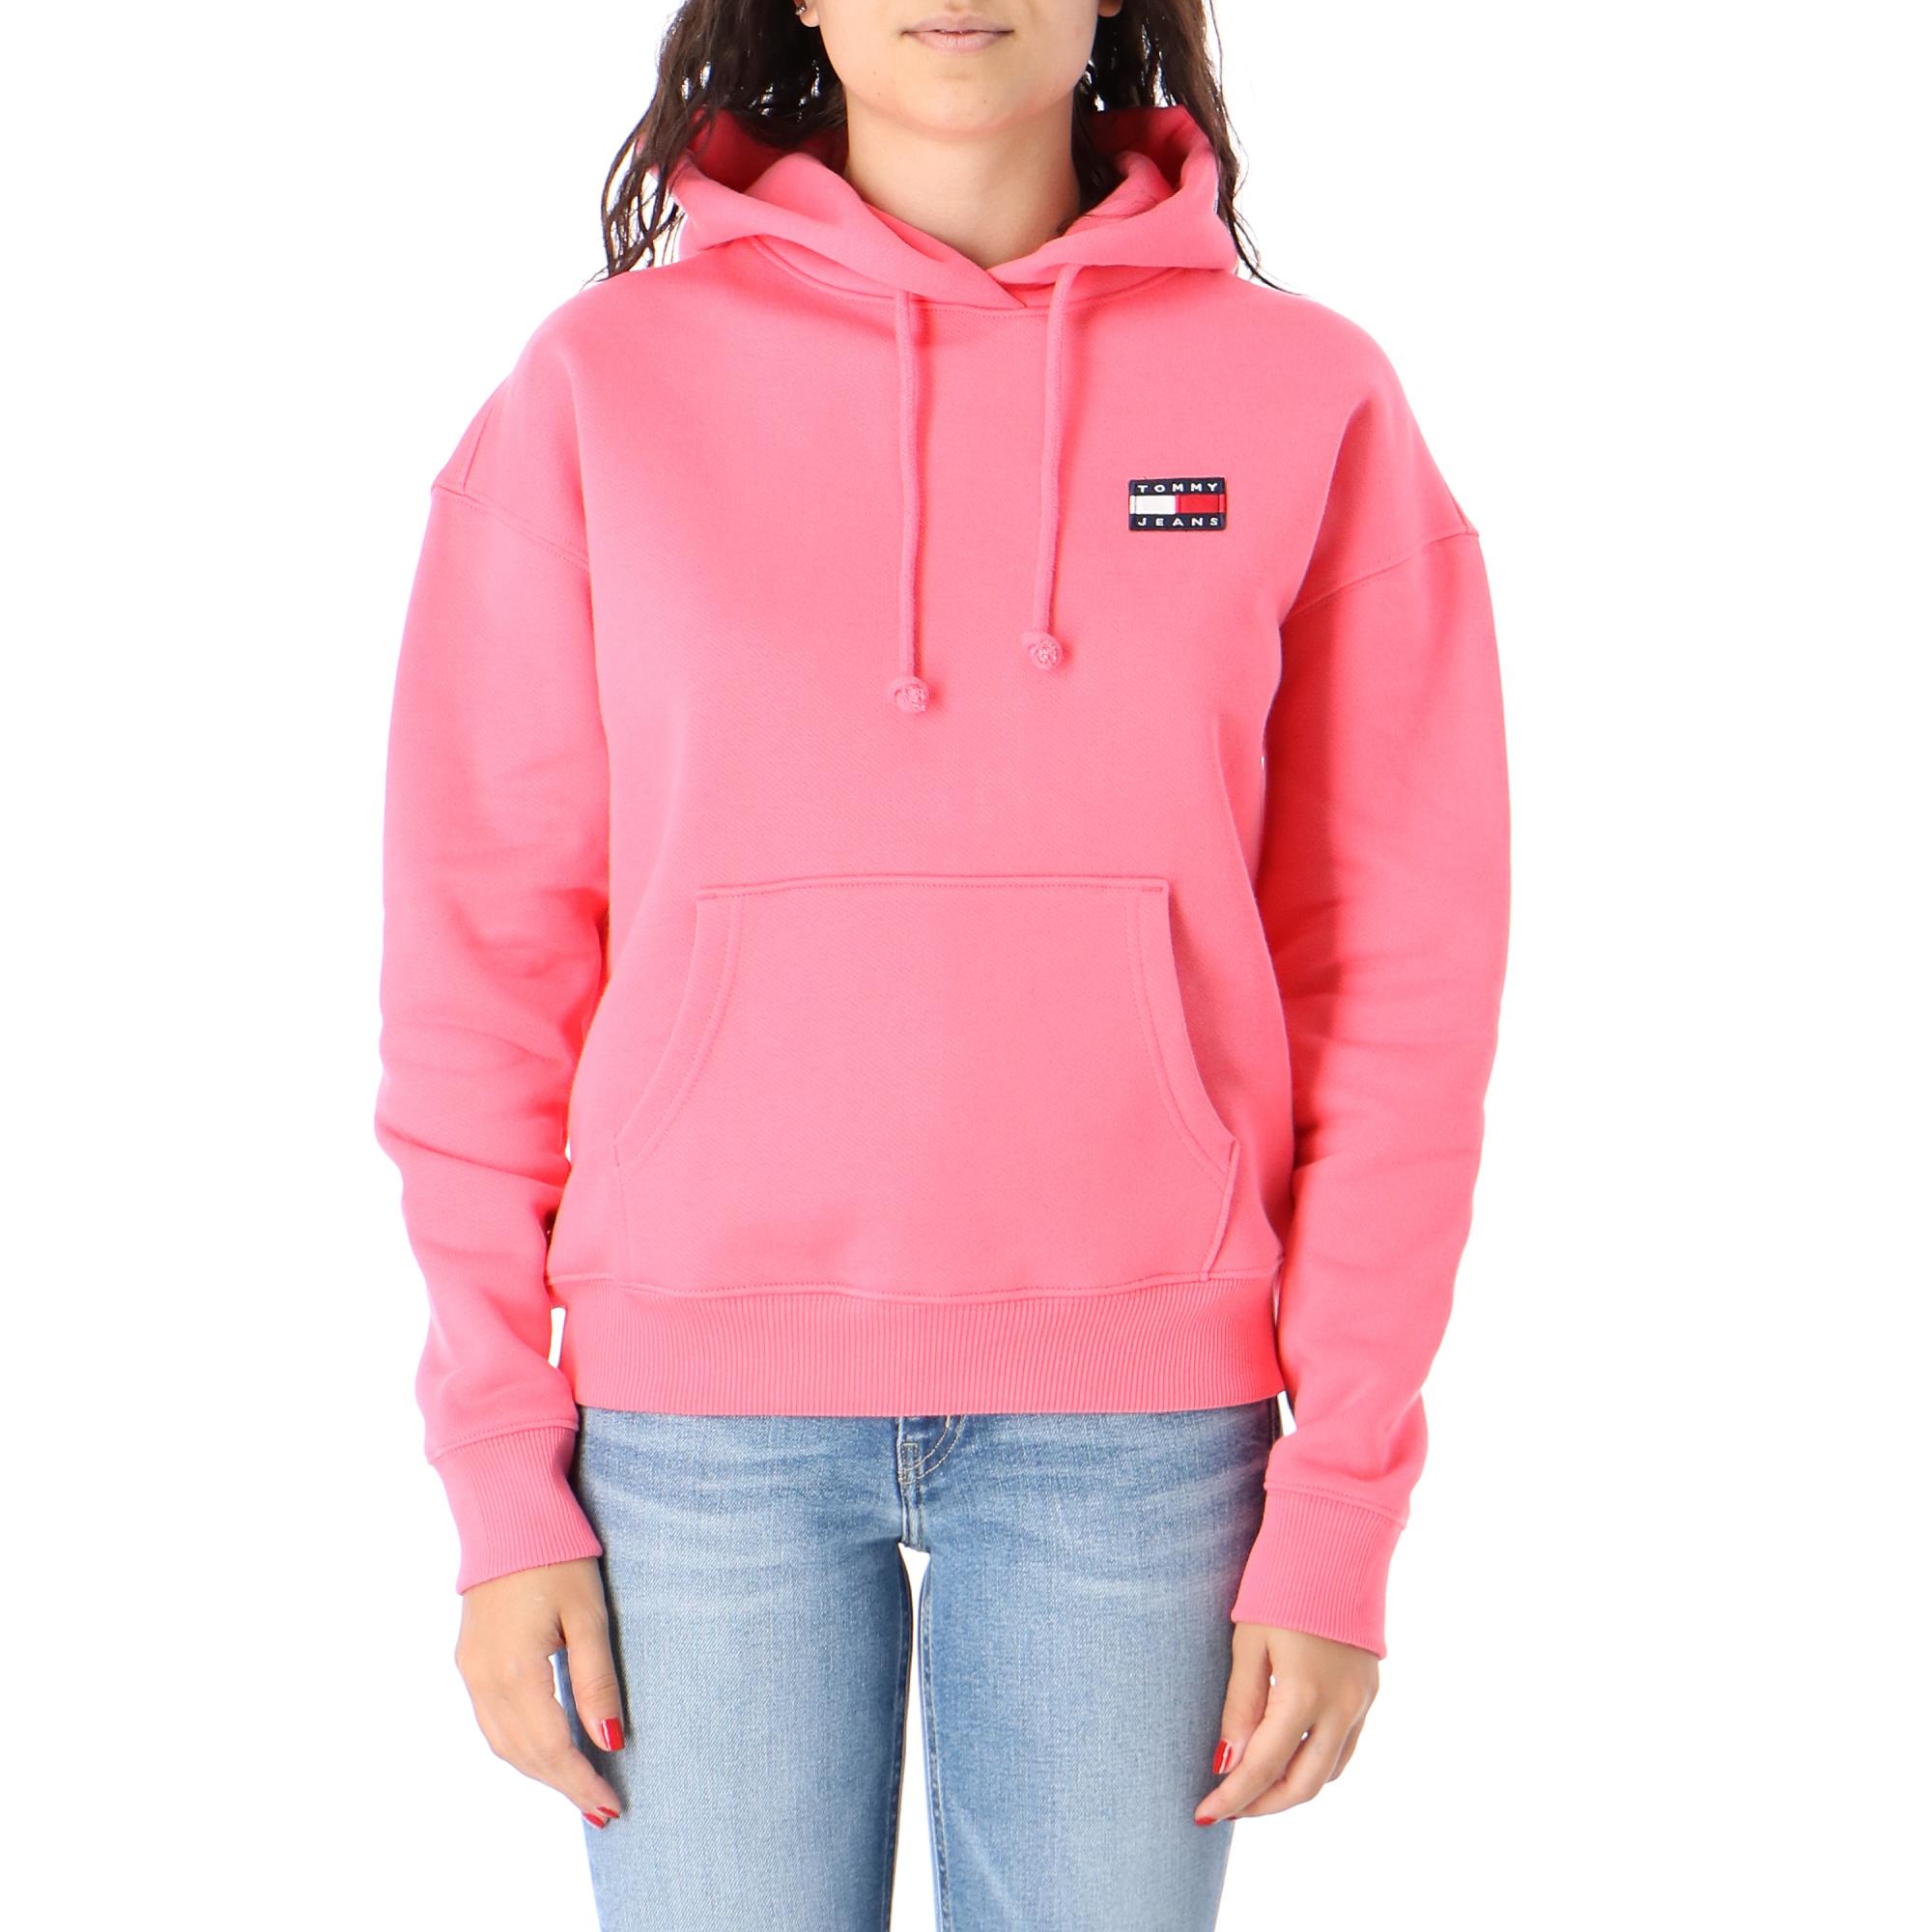 light pink tommy hilfiger hoodie